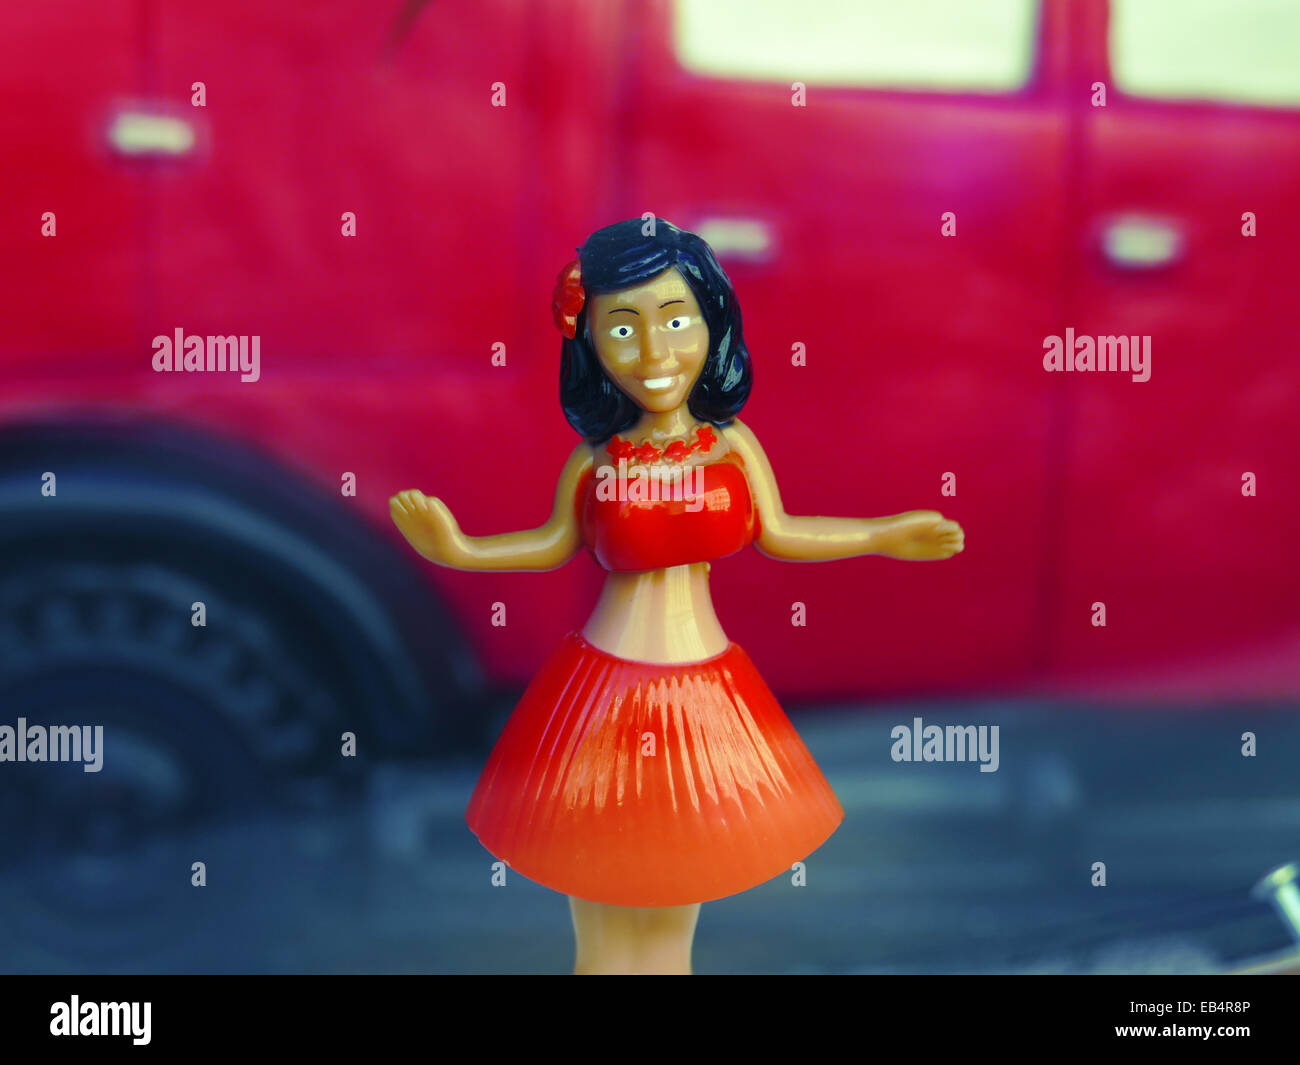 Miniature black woman girl figurine Stock Photo